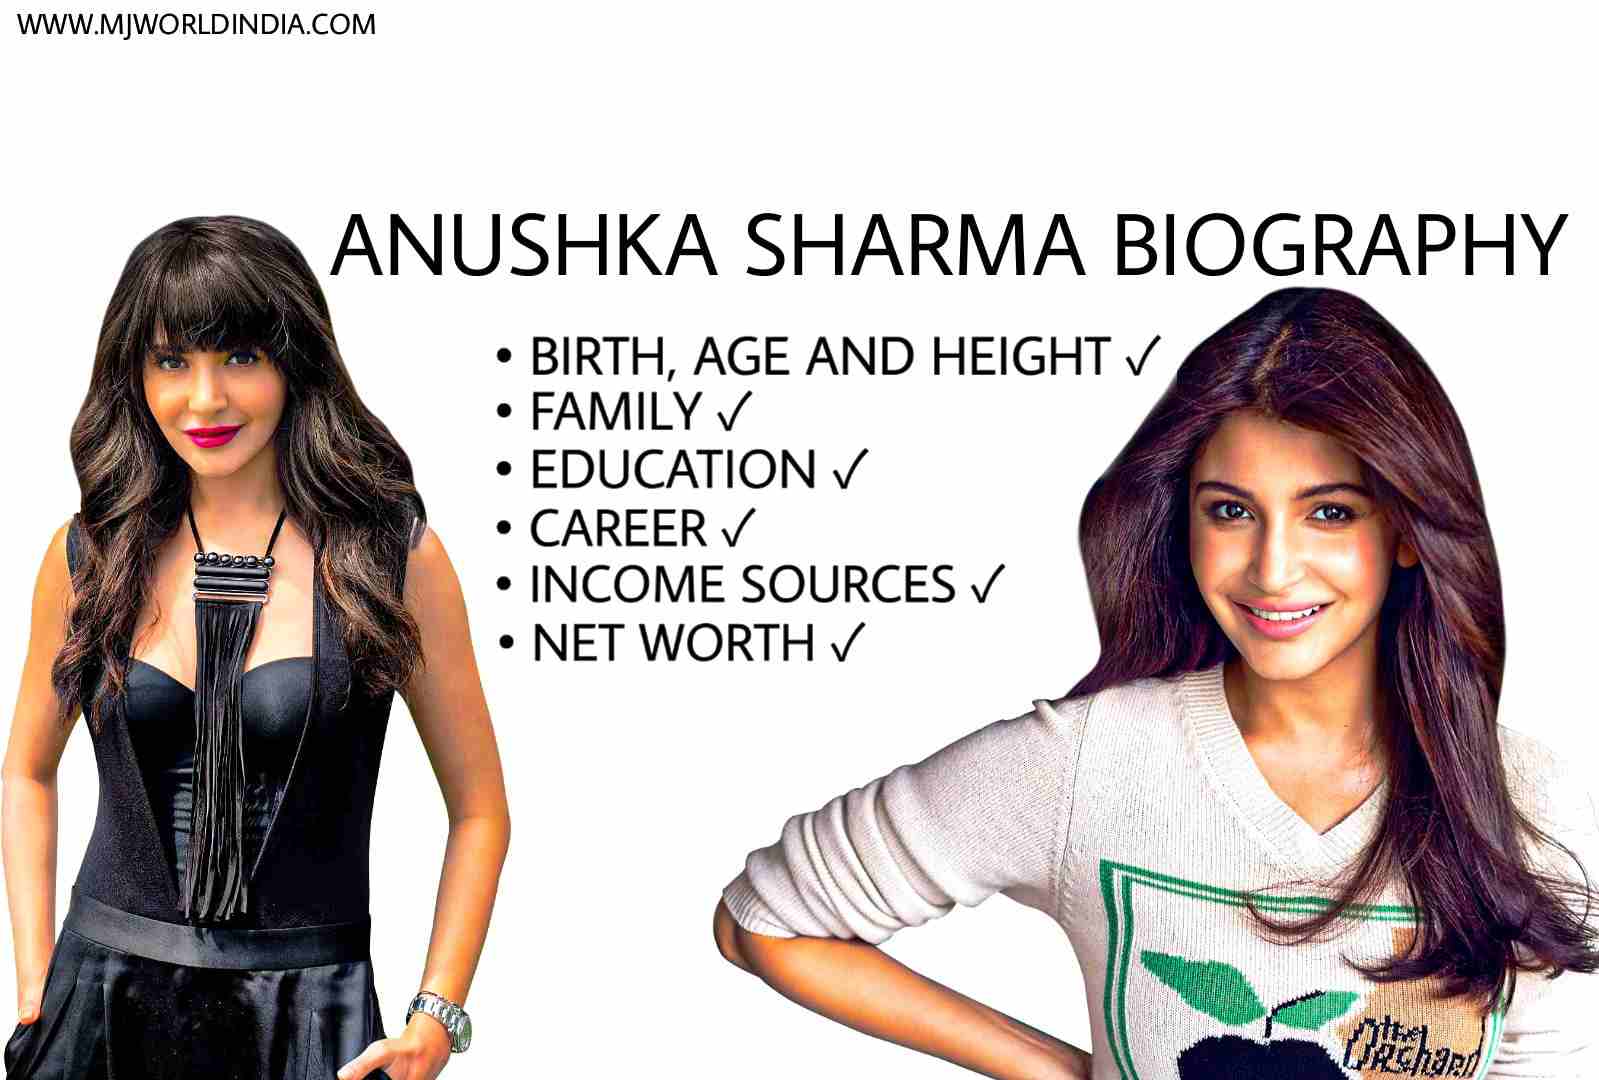 Anushka Sharma biography, Family, Career, Education, Height, Net Worth & Income Sources